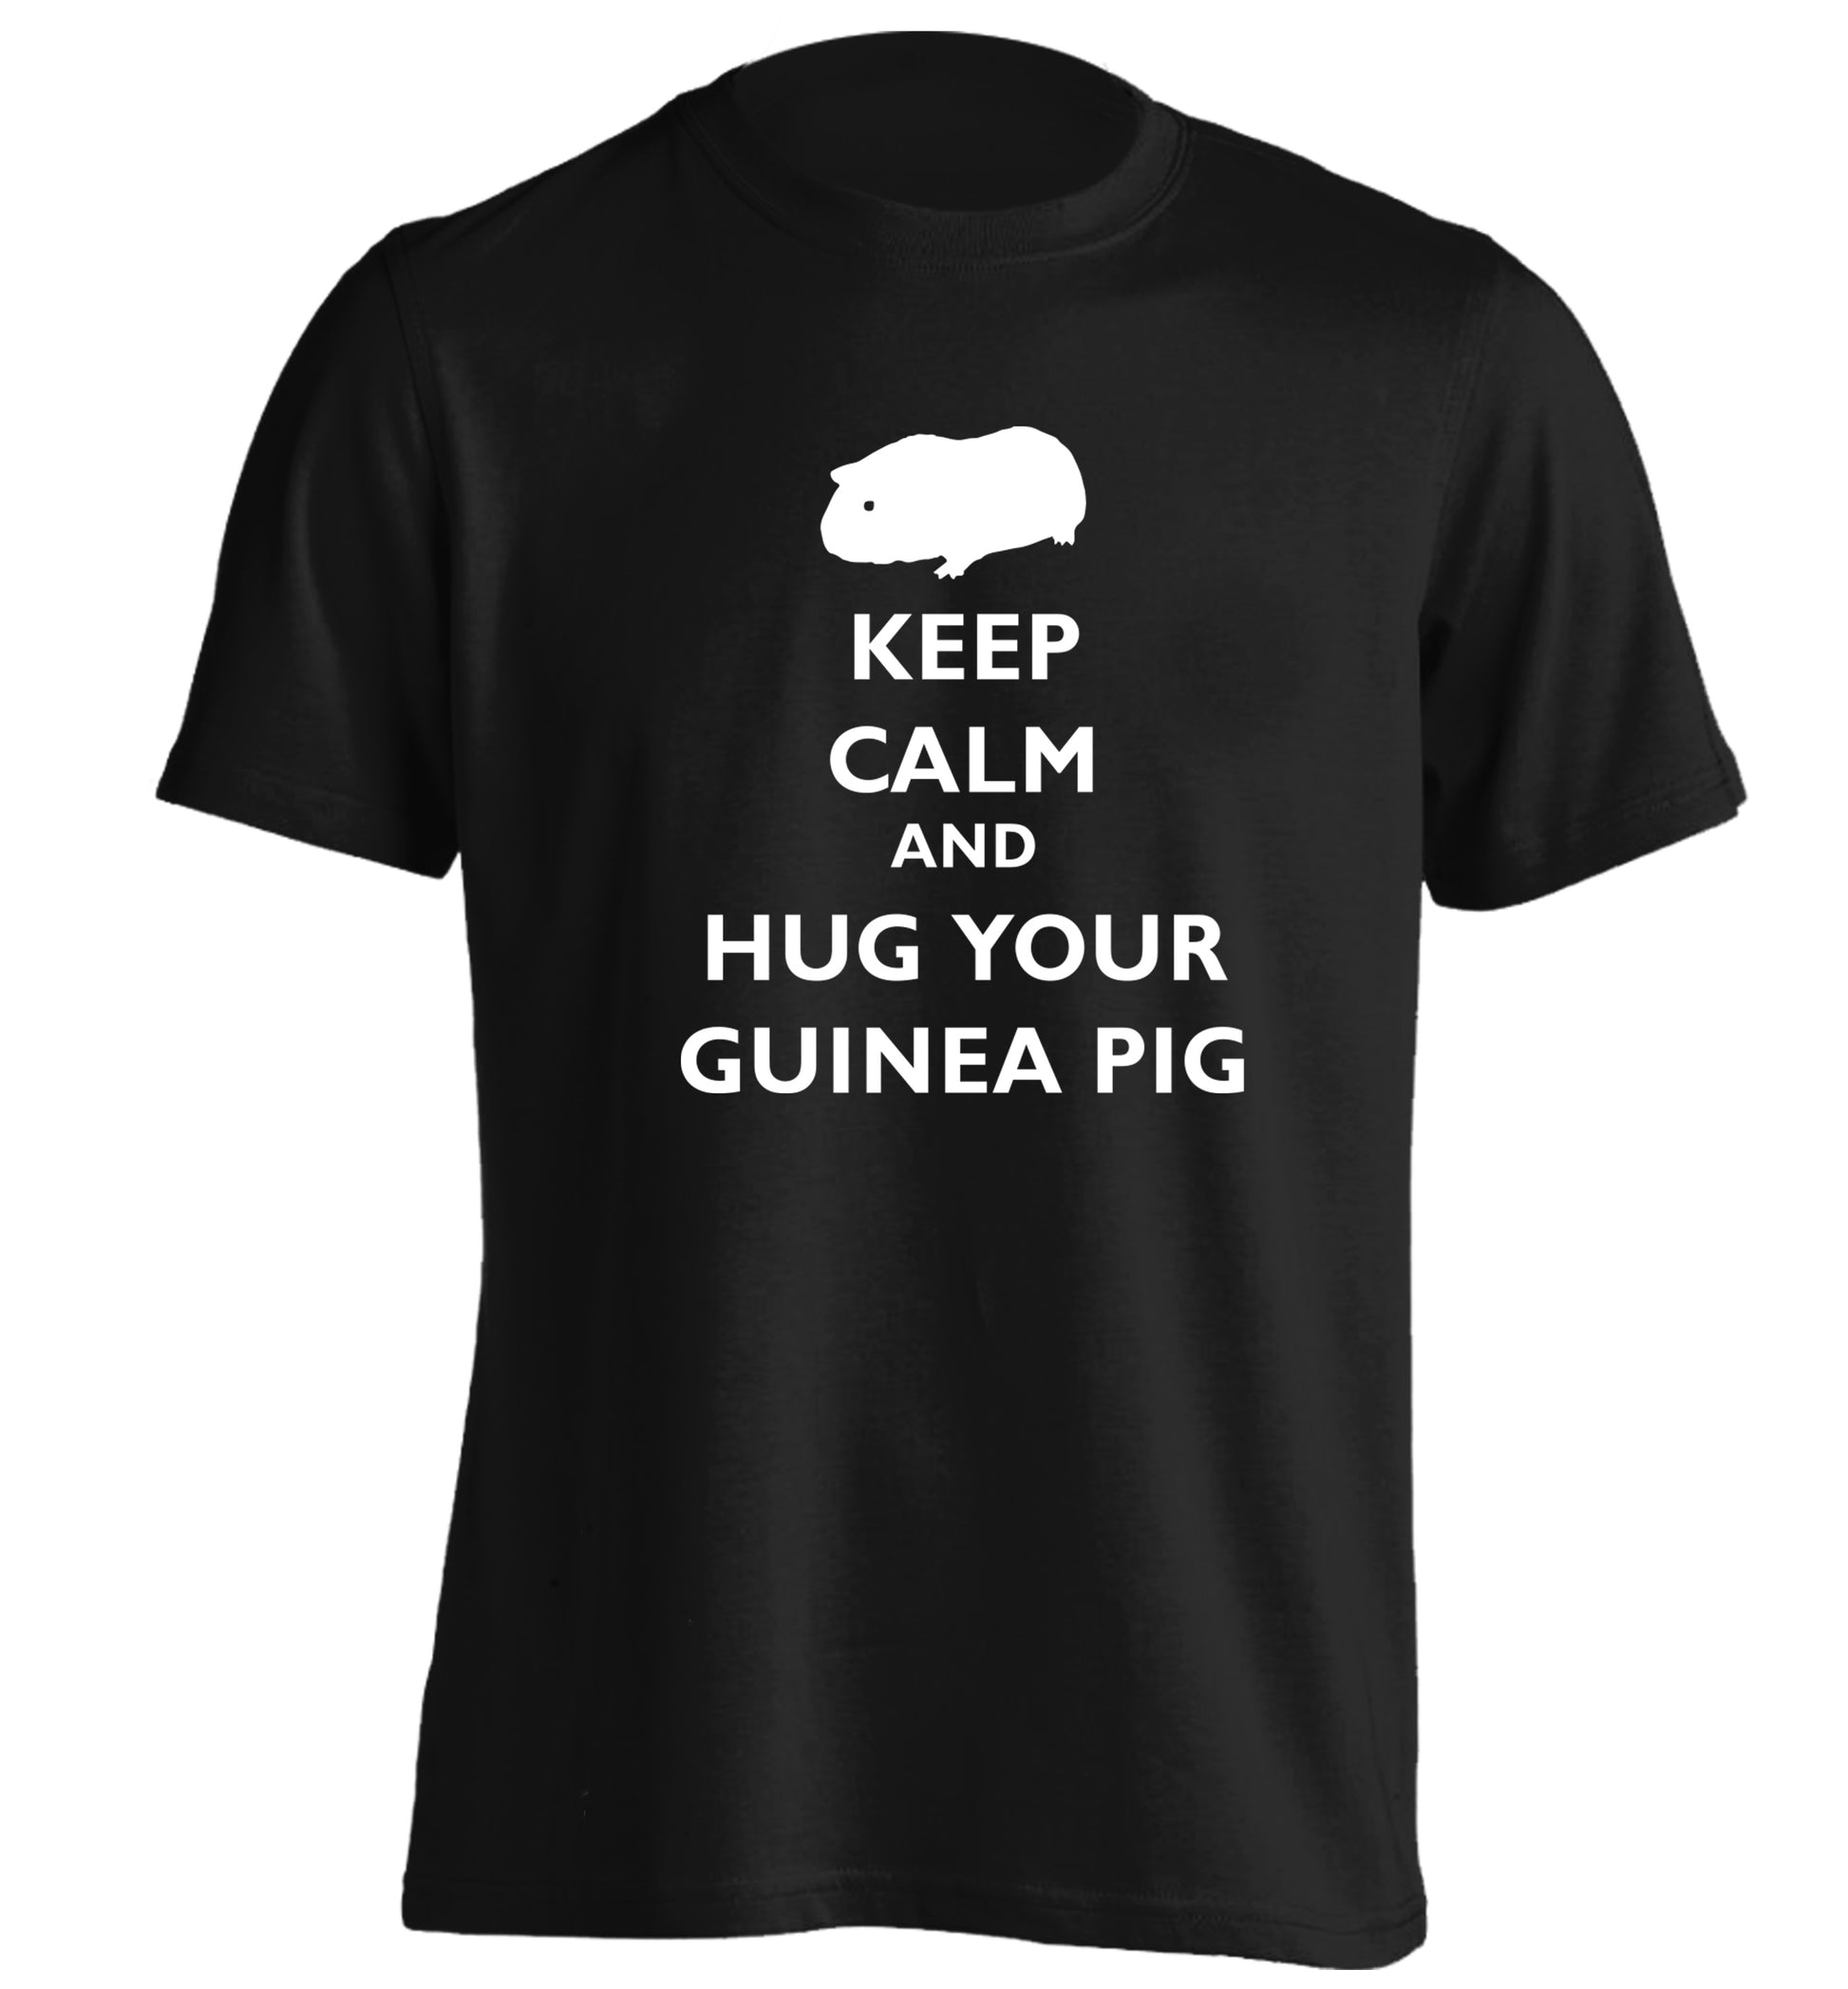 Keep calm and hug your guineapig adults unisex black Tshirt 2XL